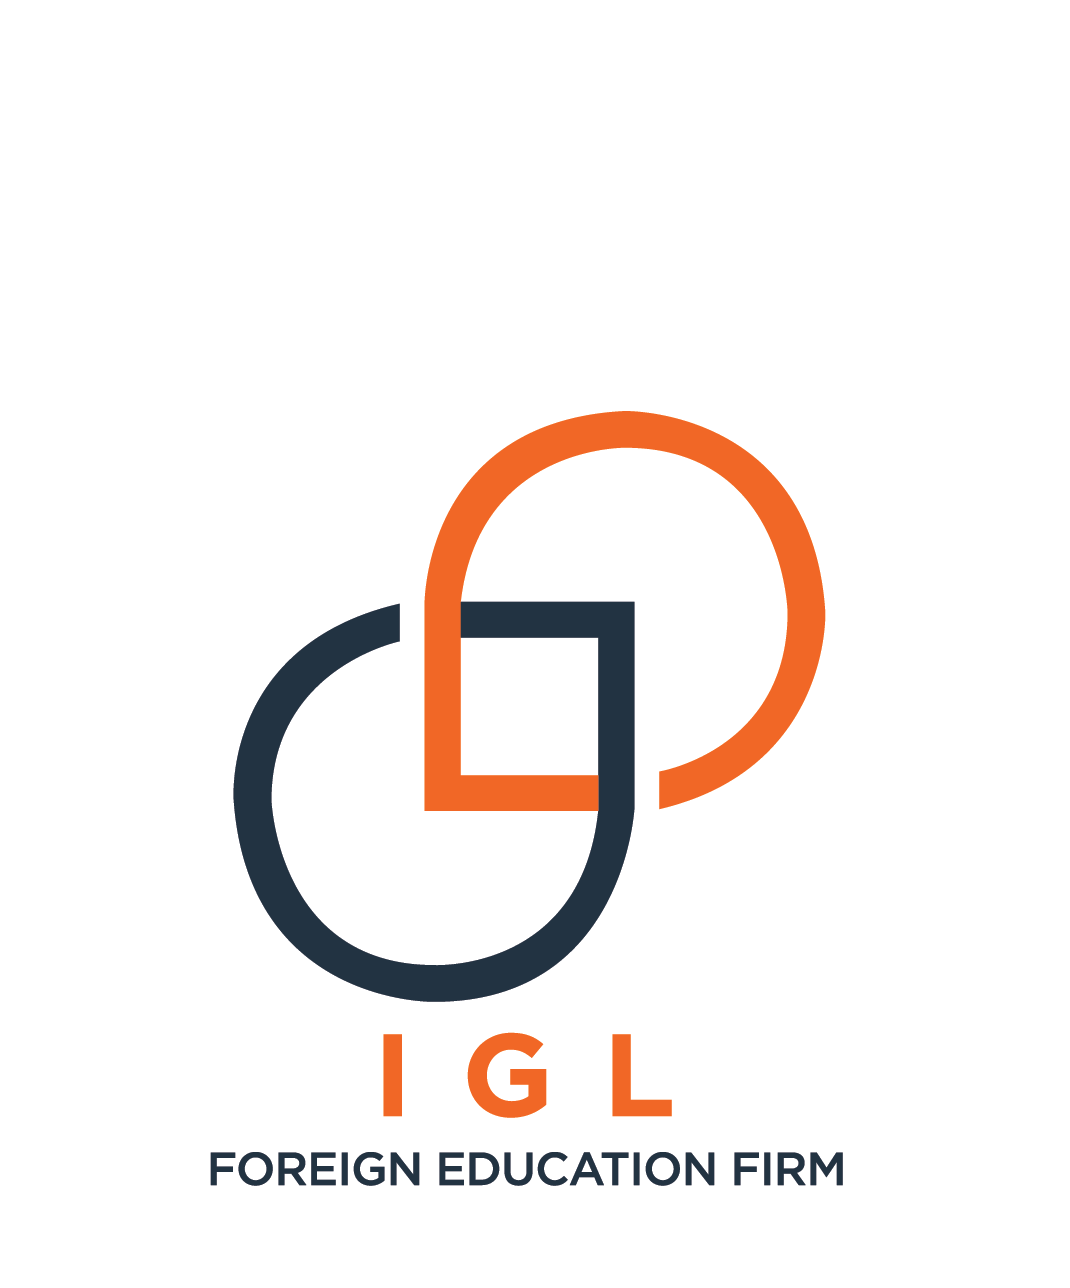 IGL Foreign